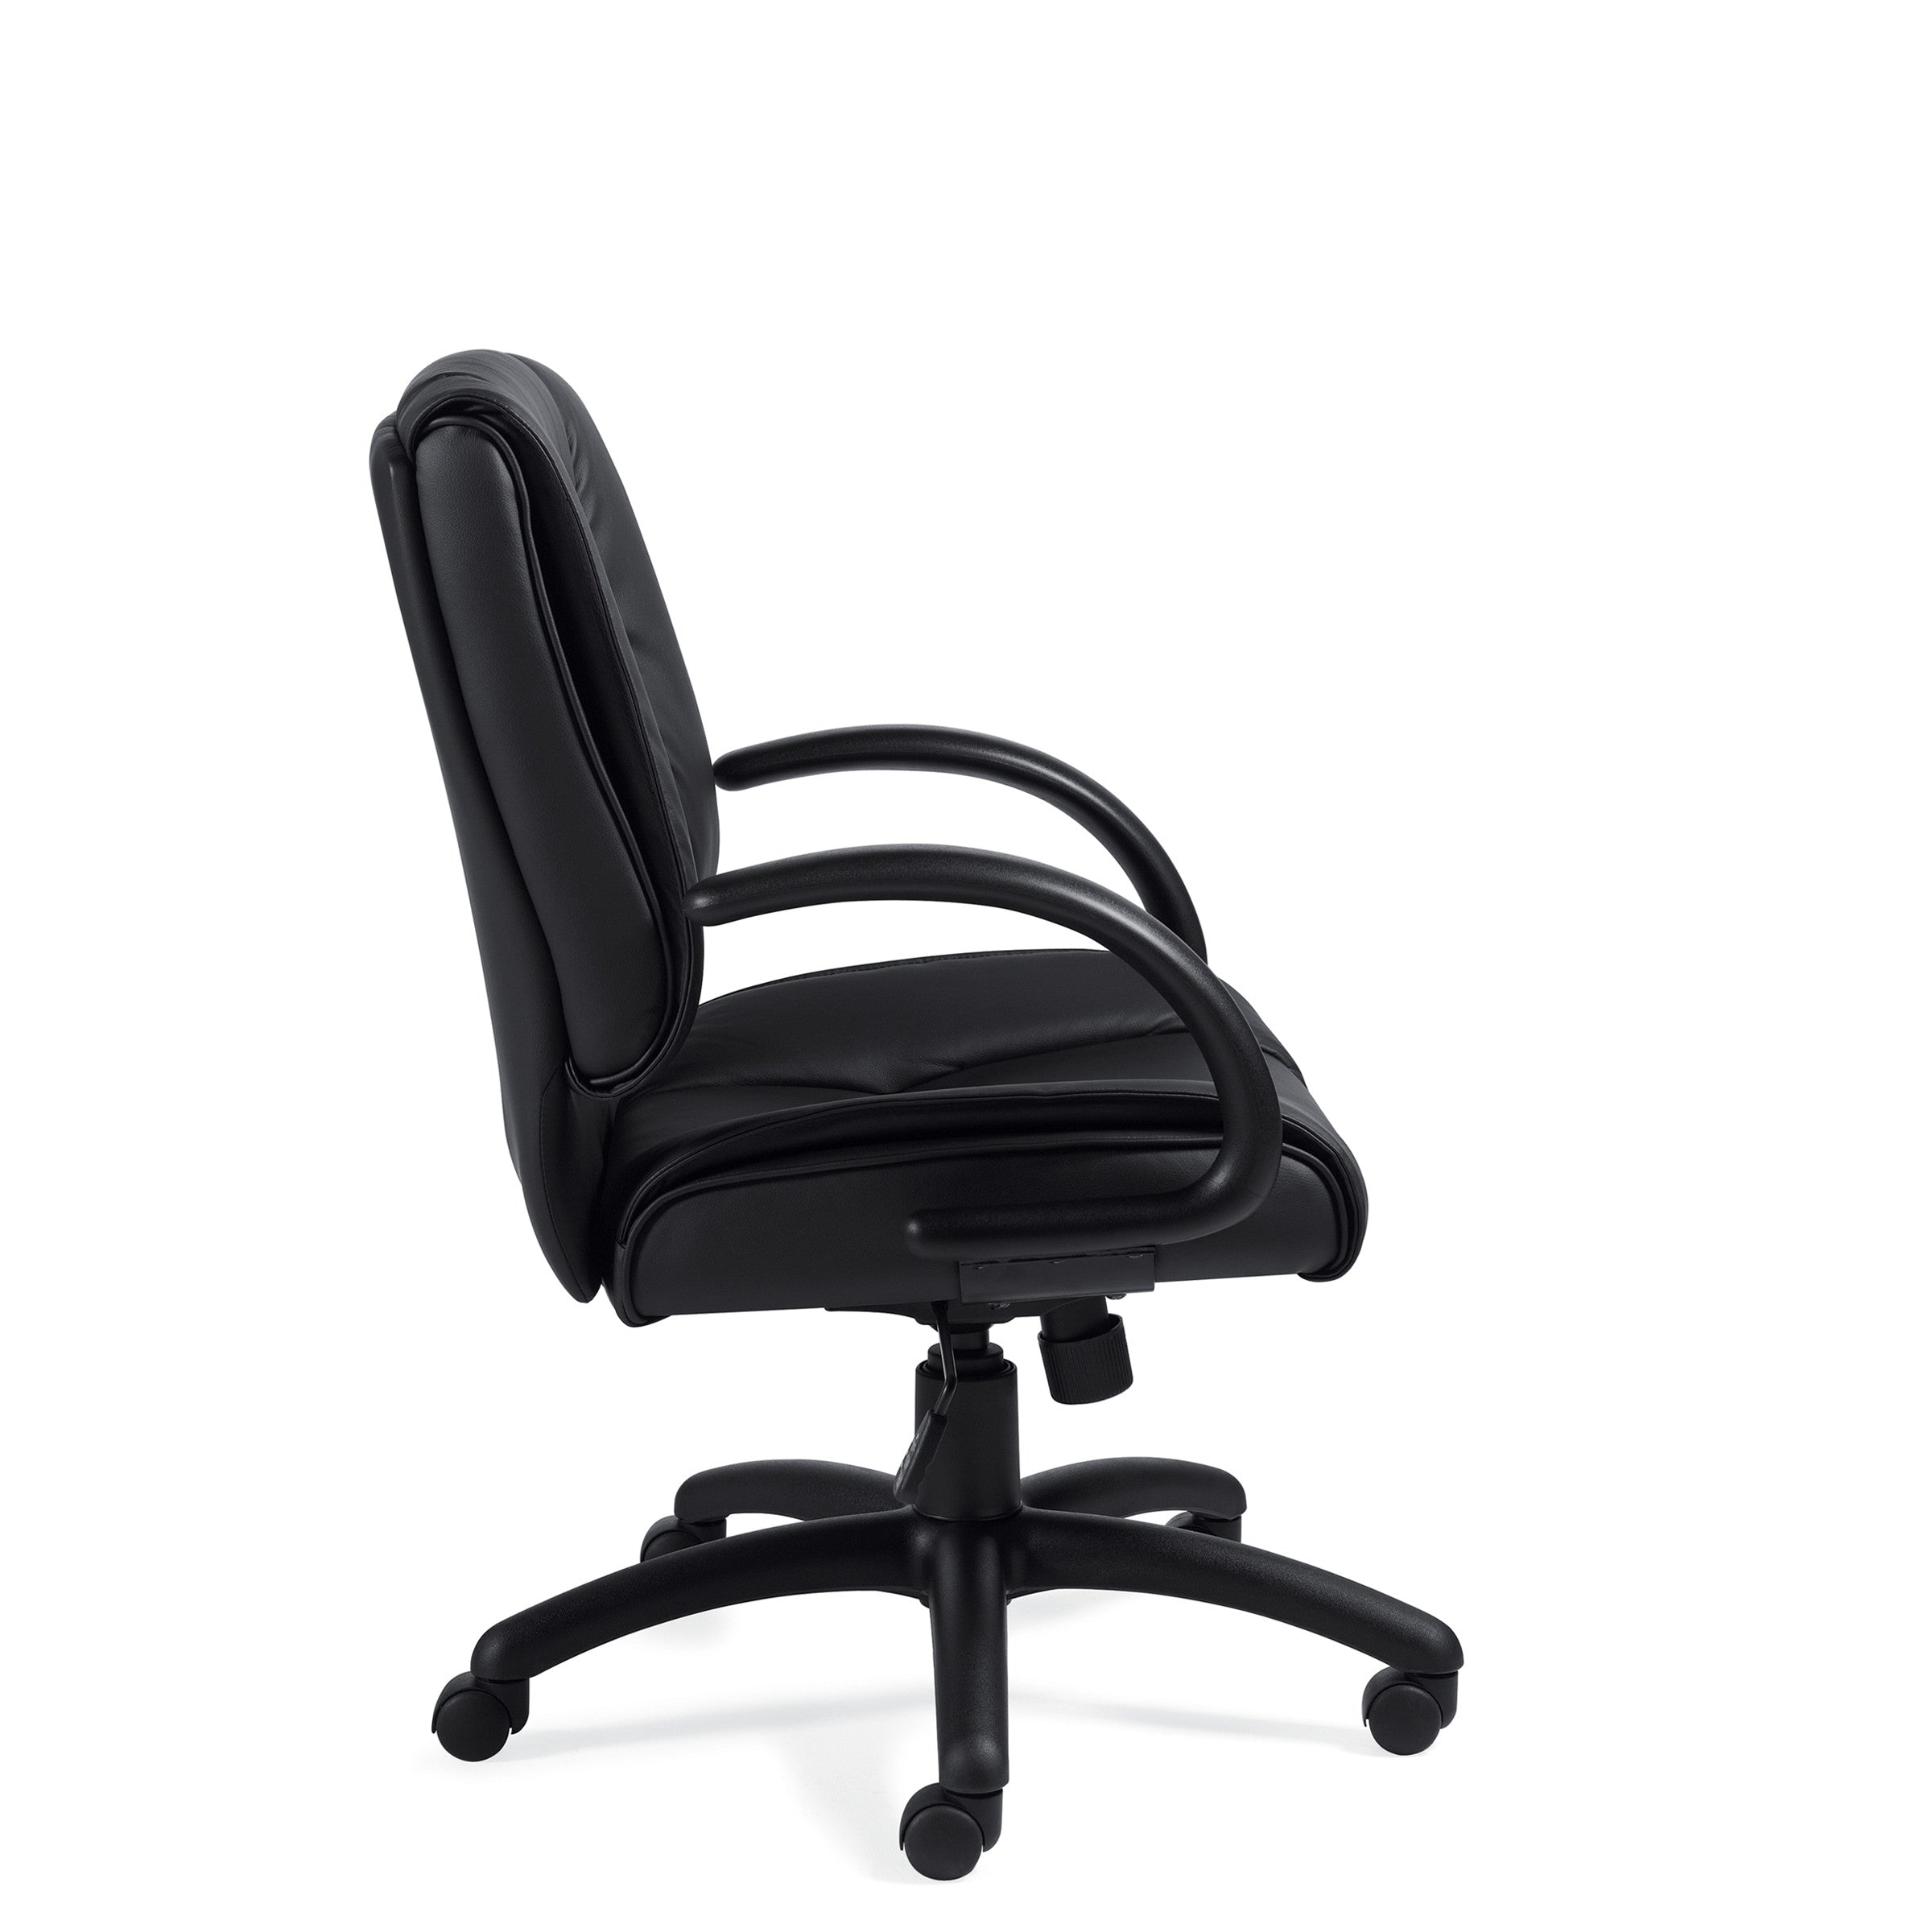 Customized Luxhide Management Tilter Chair G2700-1 - Kainosbuy.com